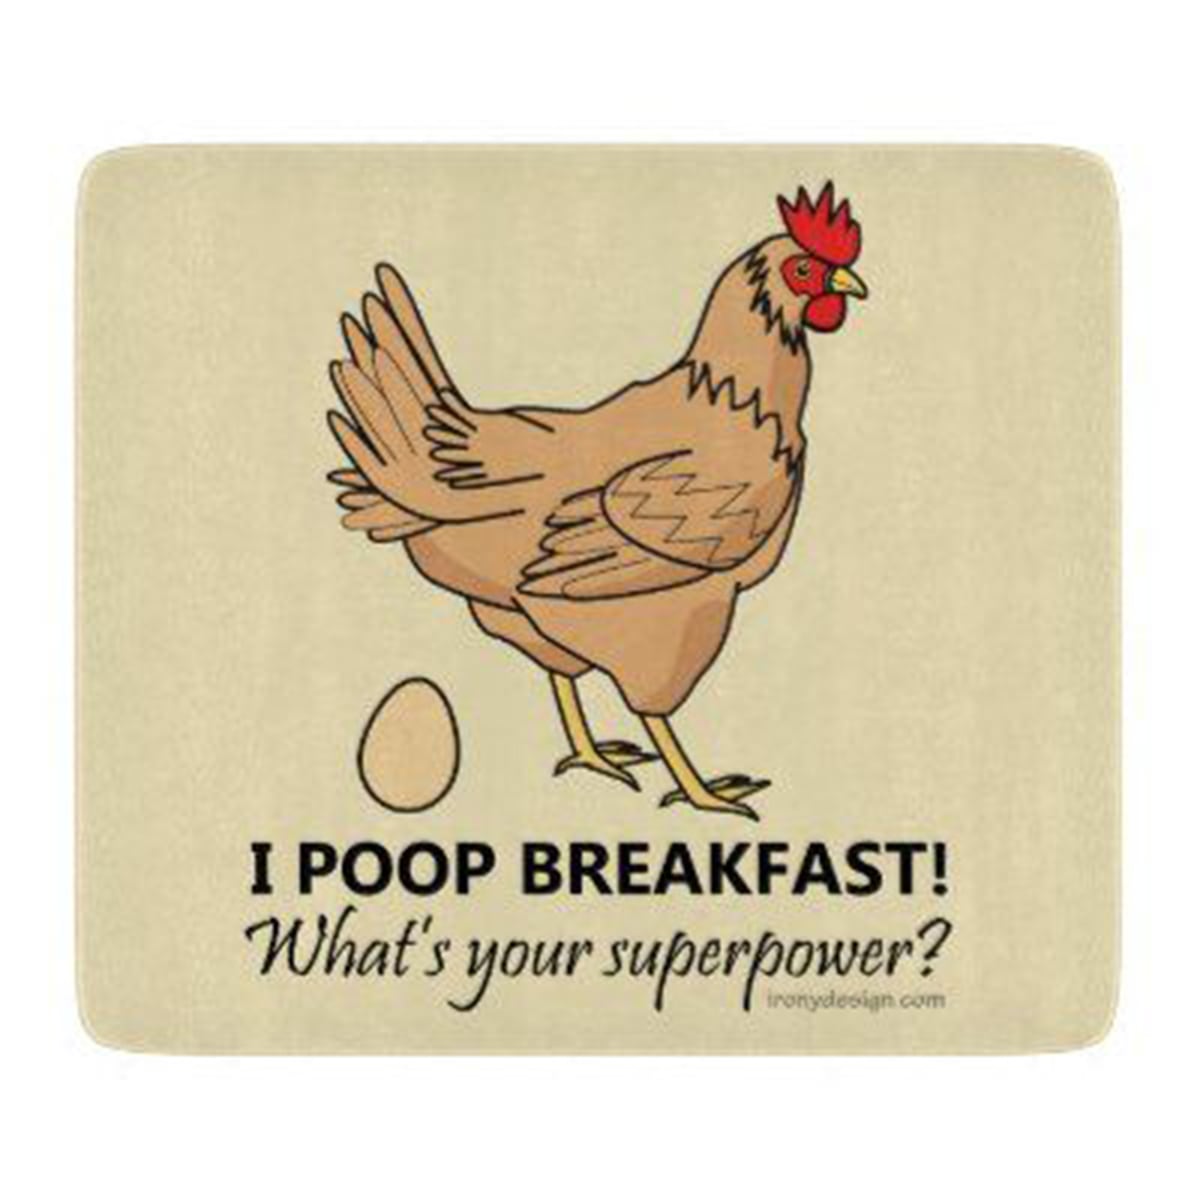 I poop breakfast! What's your super power?